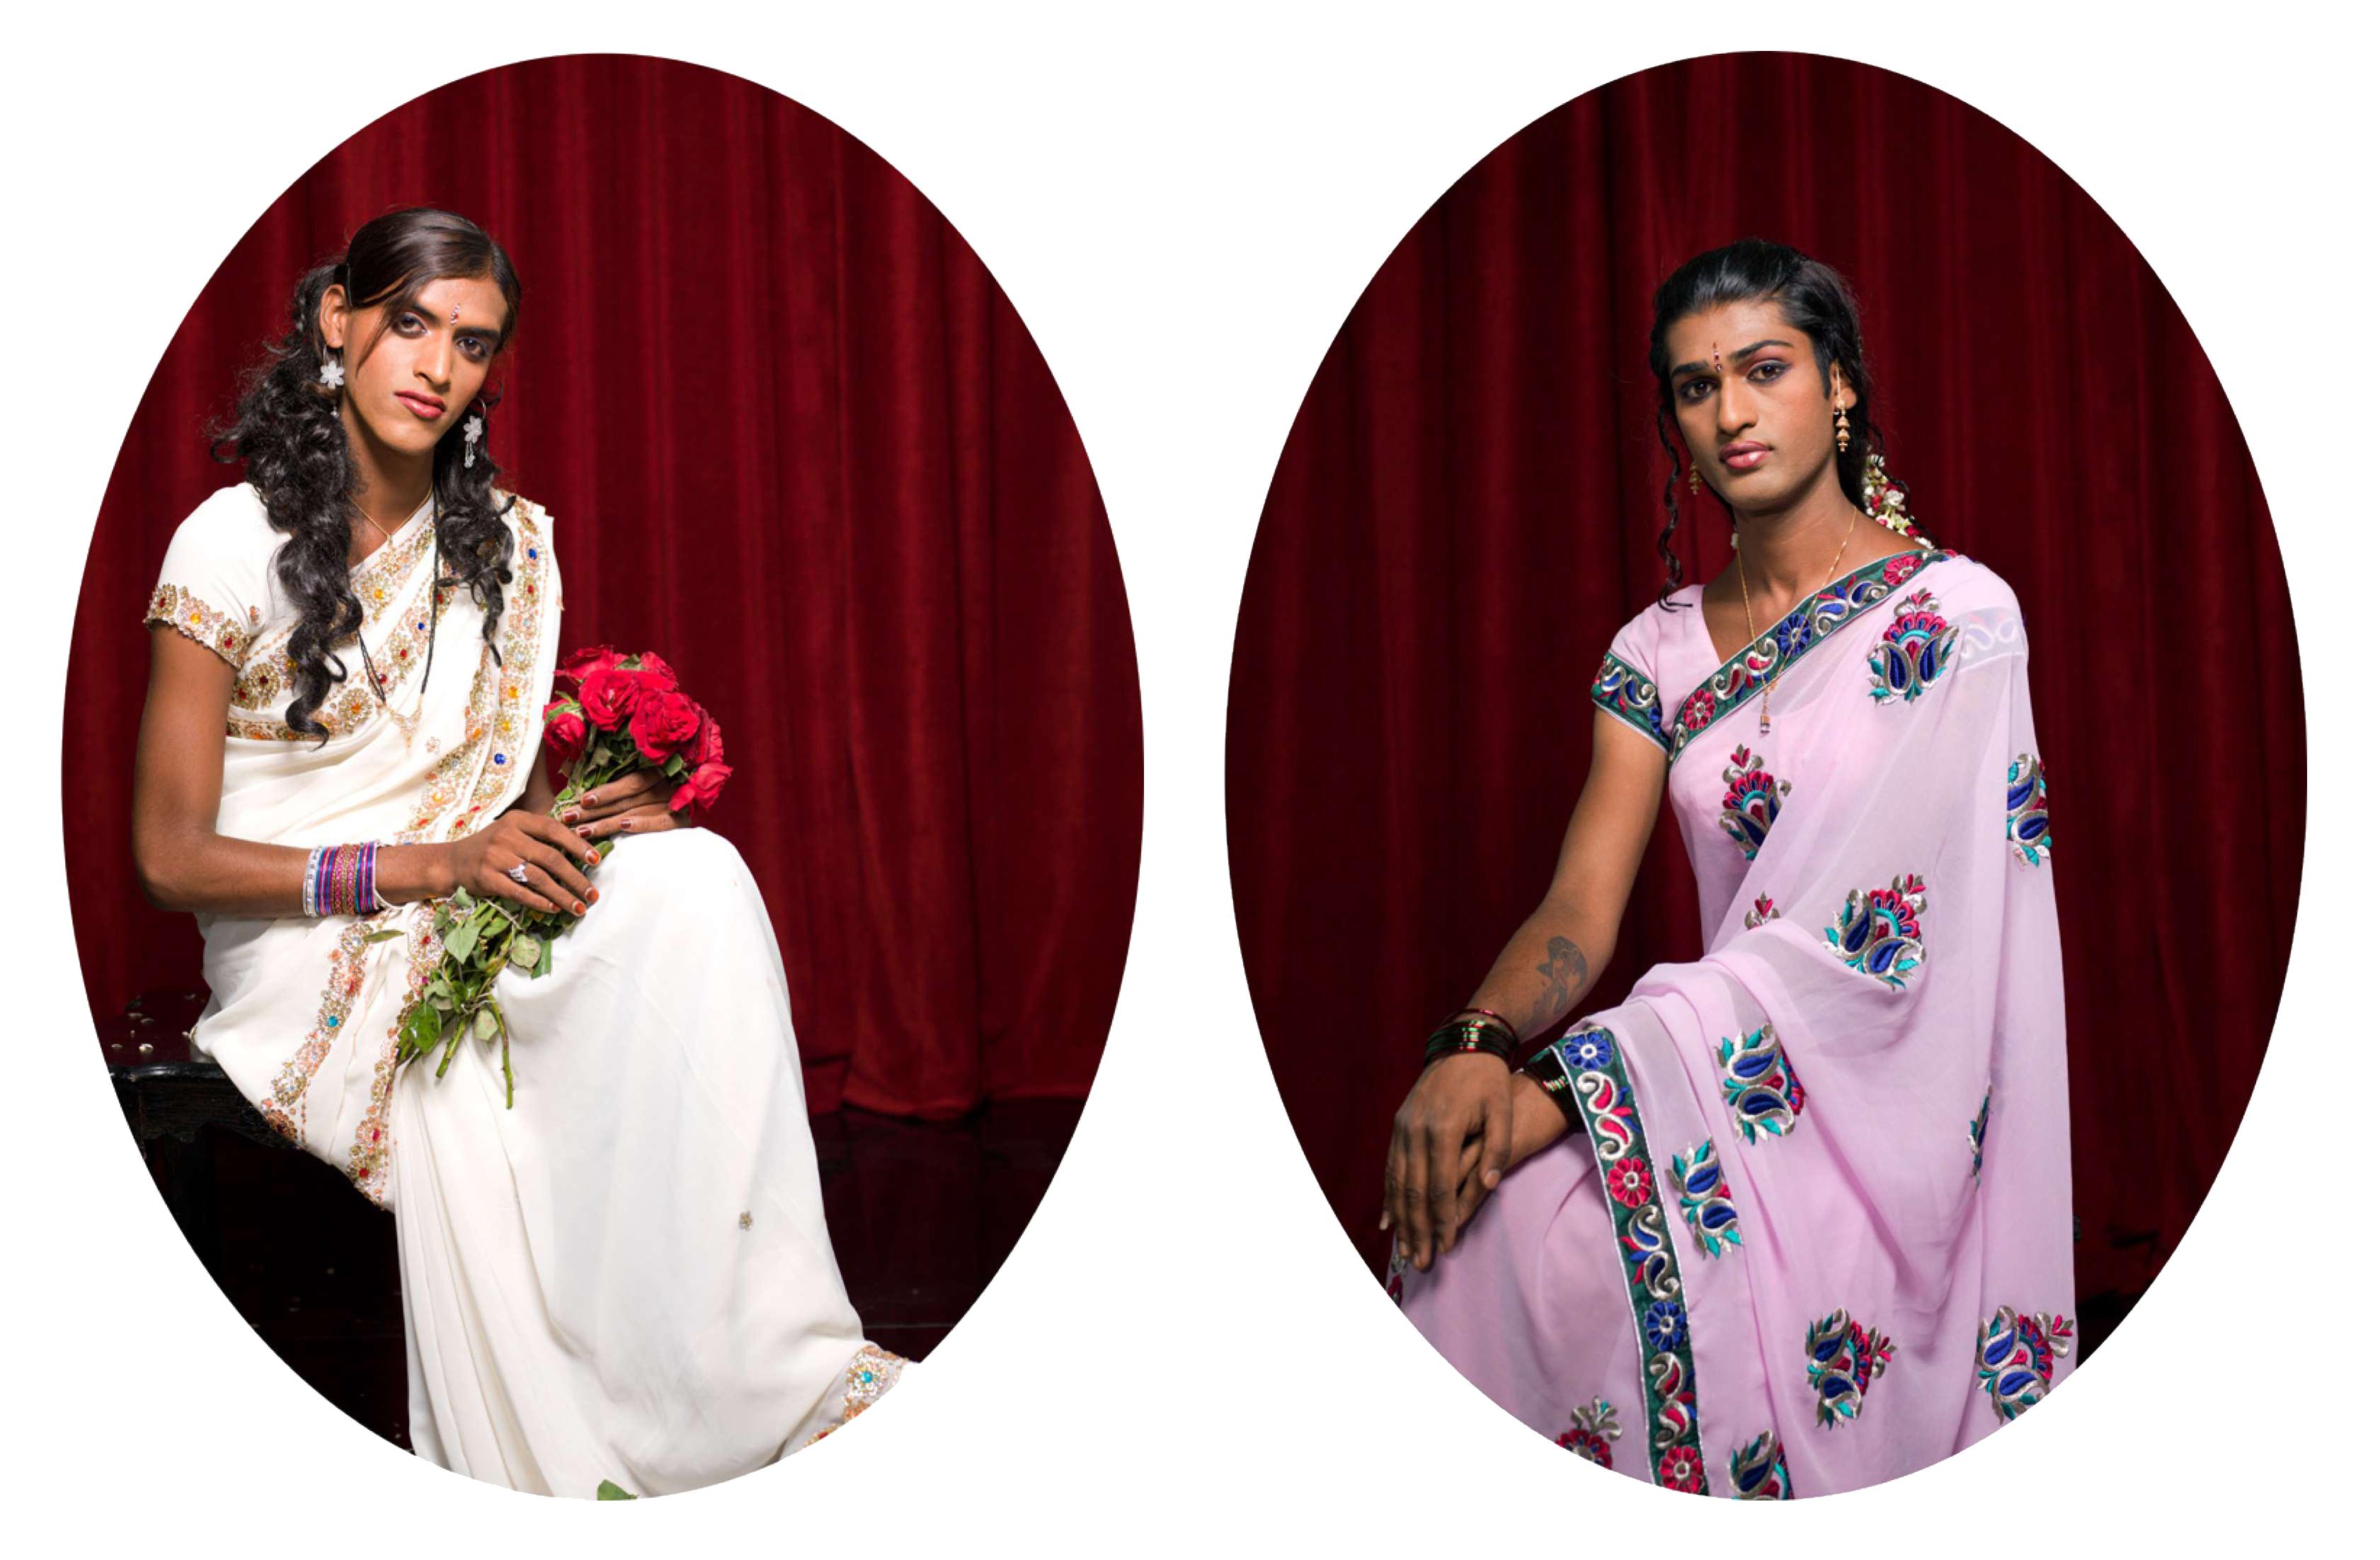 Jill Peters Portrait Photograph – Muskan und Sangita, Porträts. Aus der Serie The Third Gender of India